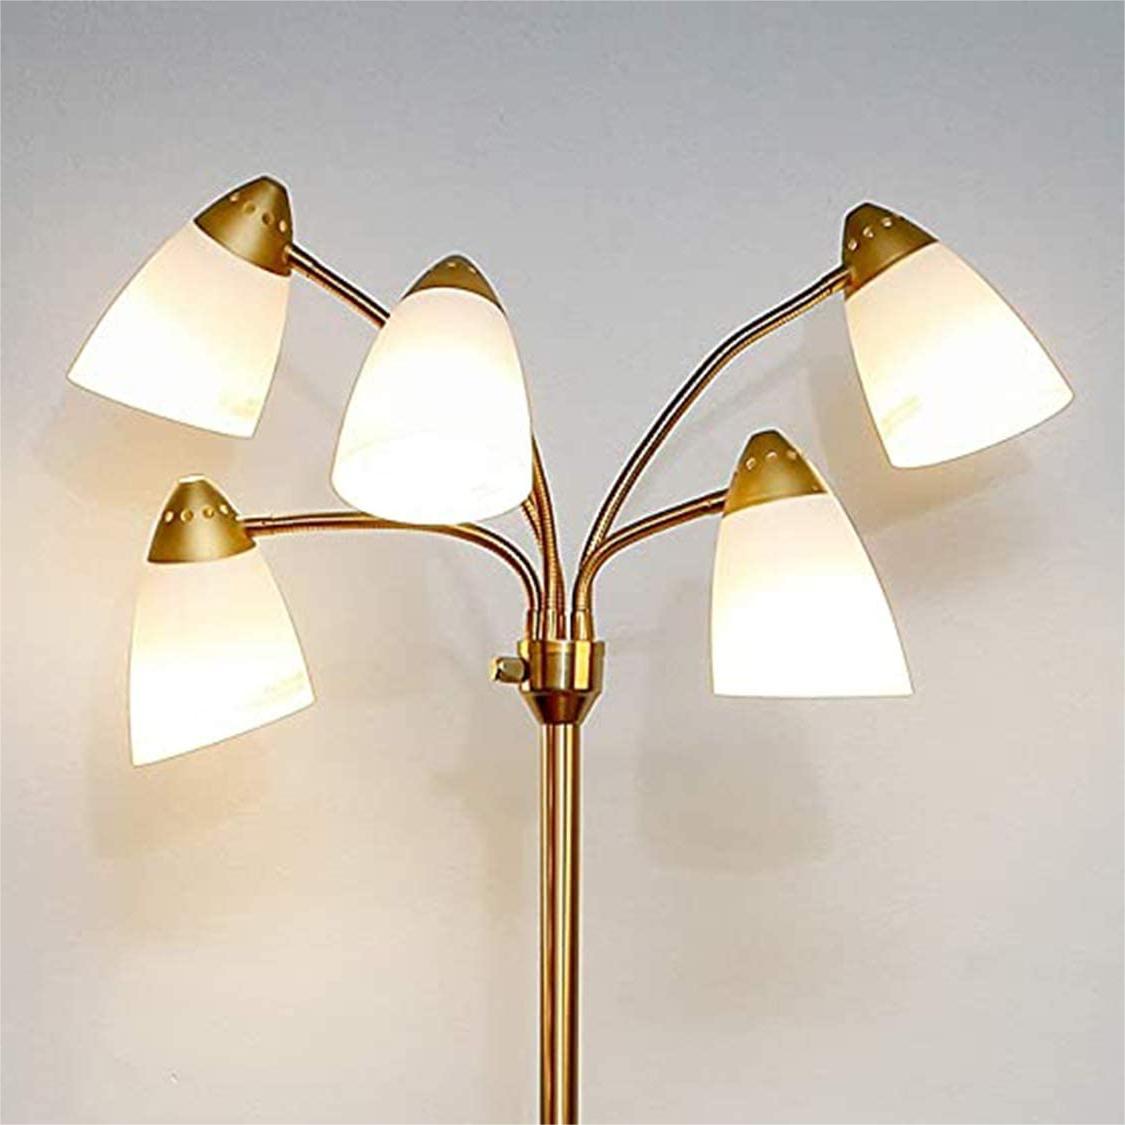 Chinese Style Handmade Blown Lighting Lamp Cover02